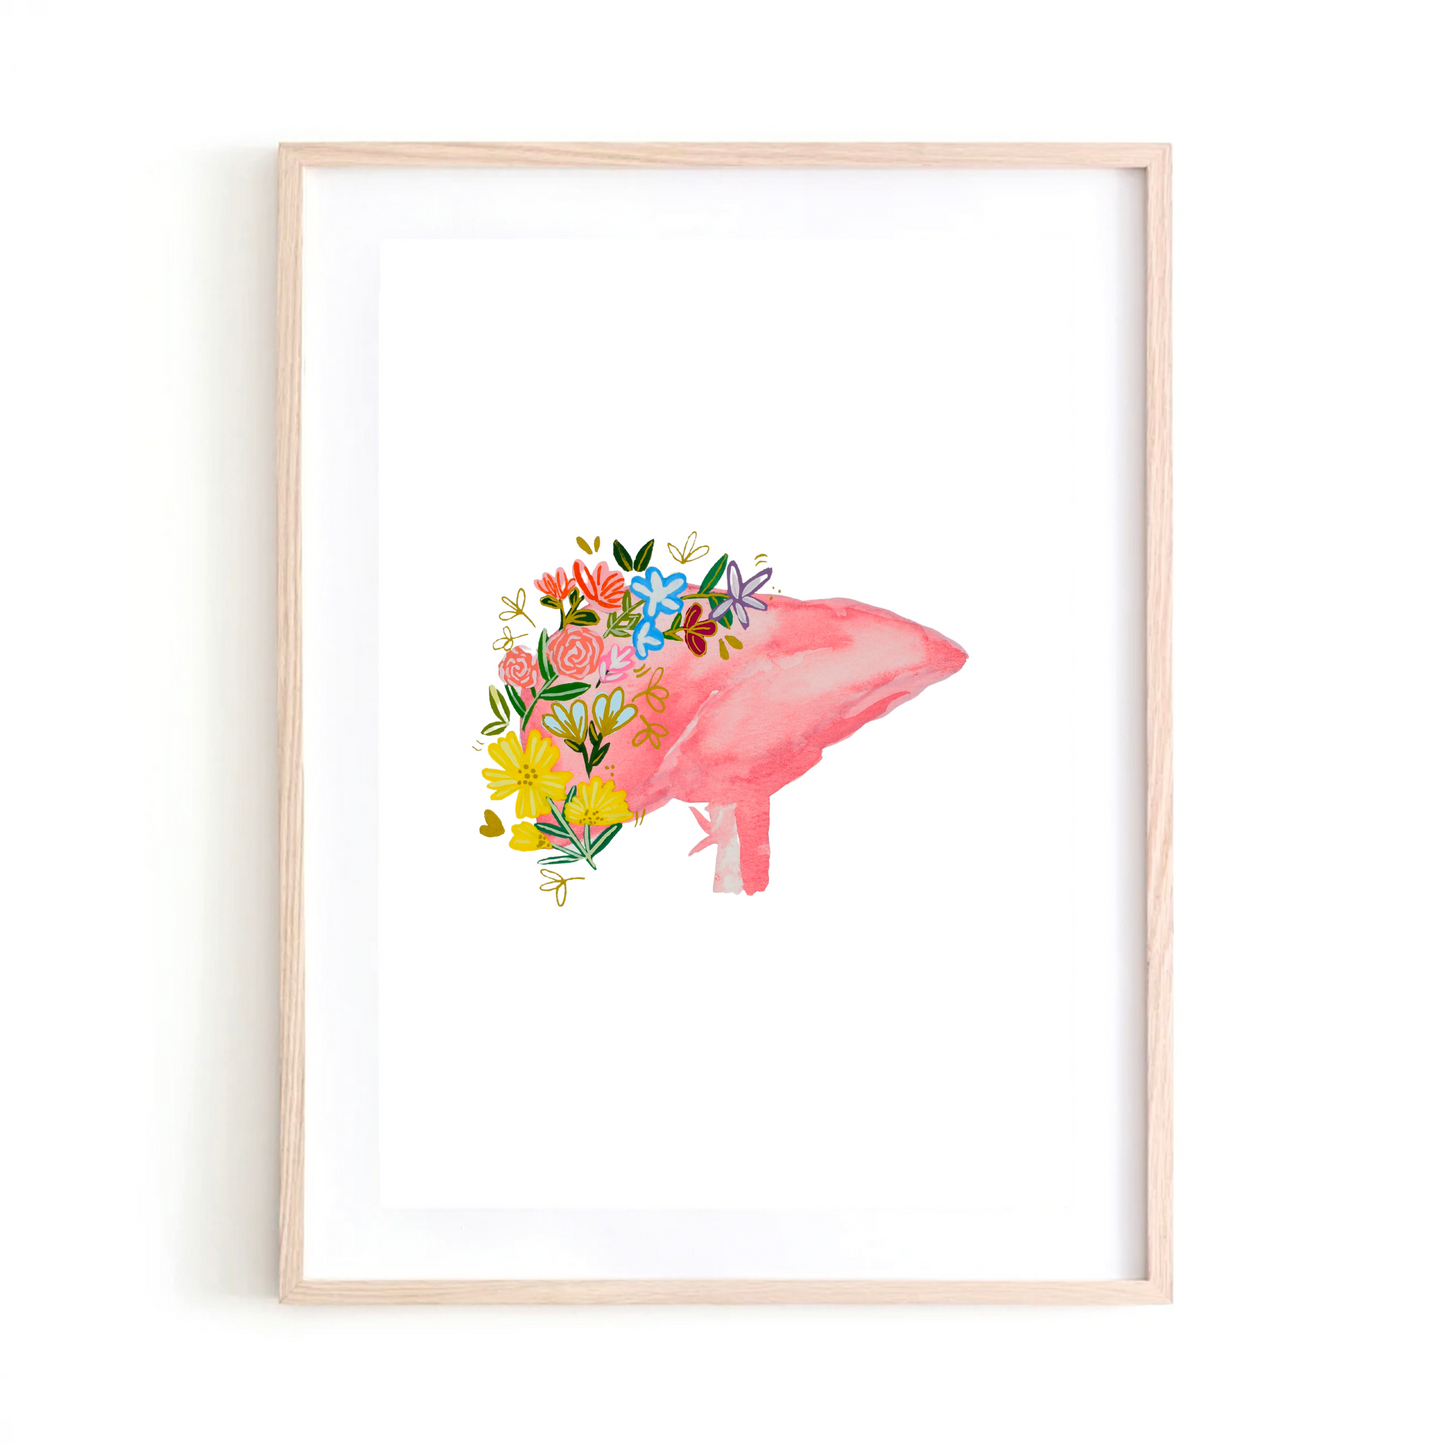 Liver Medicine & Flowers art print